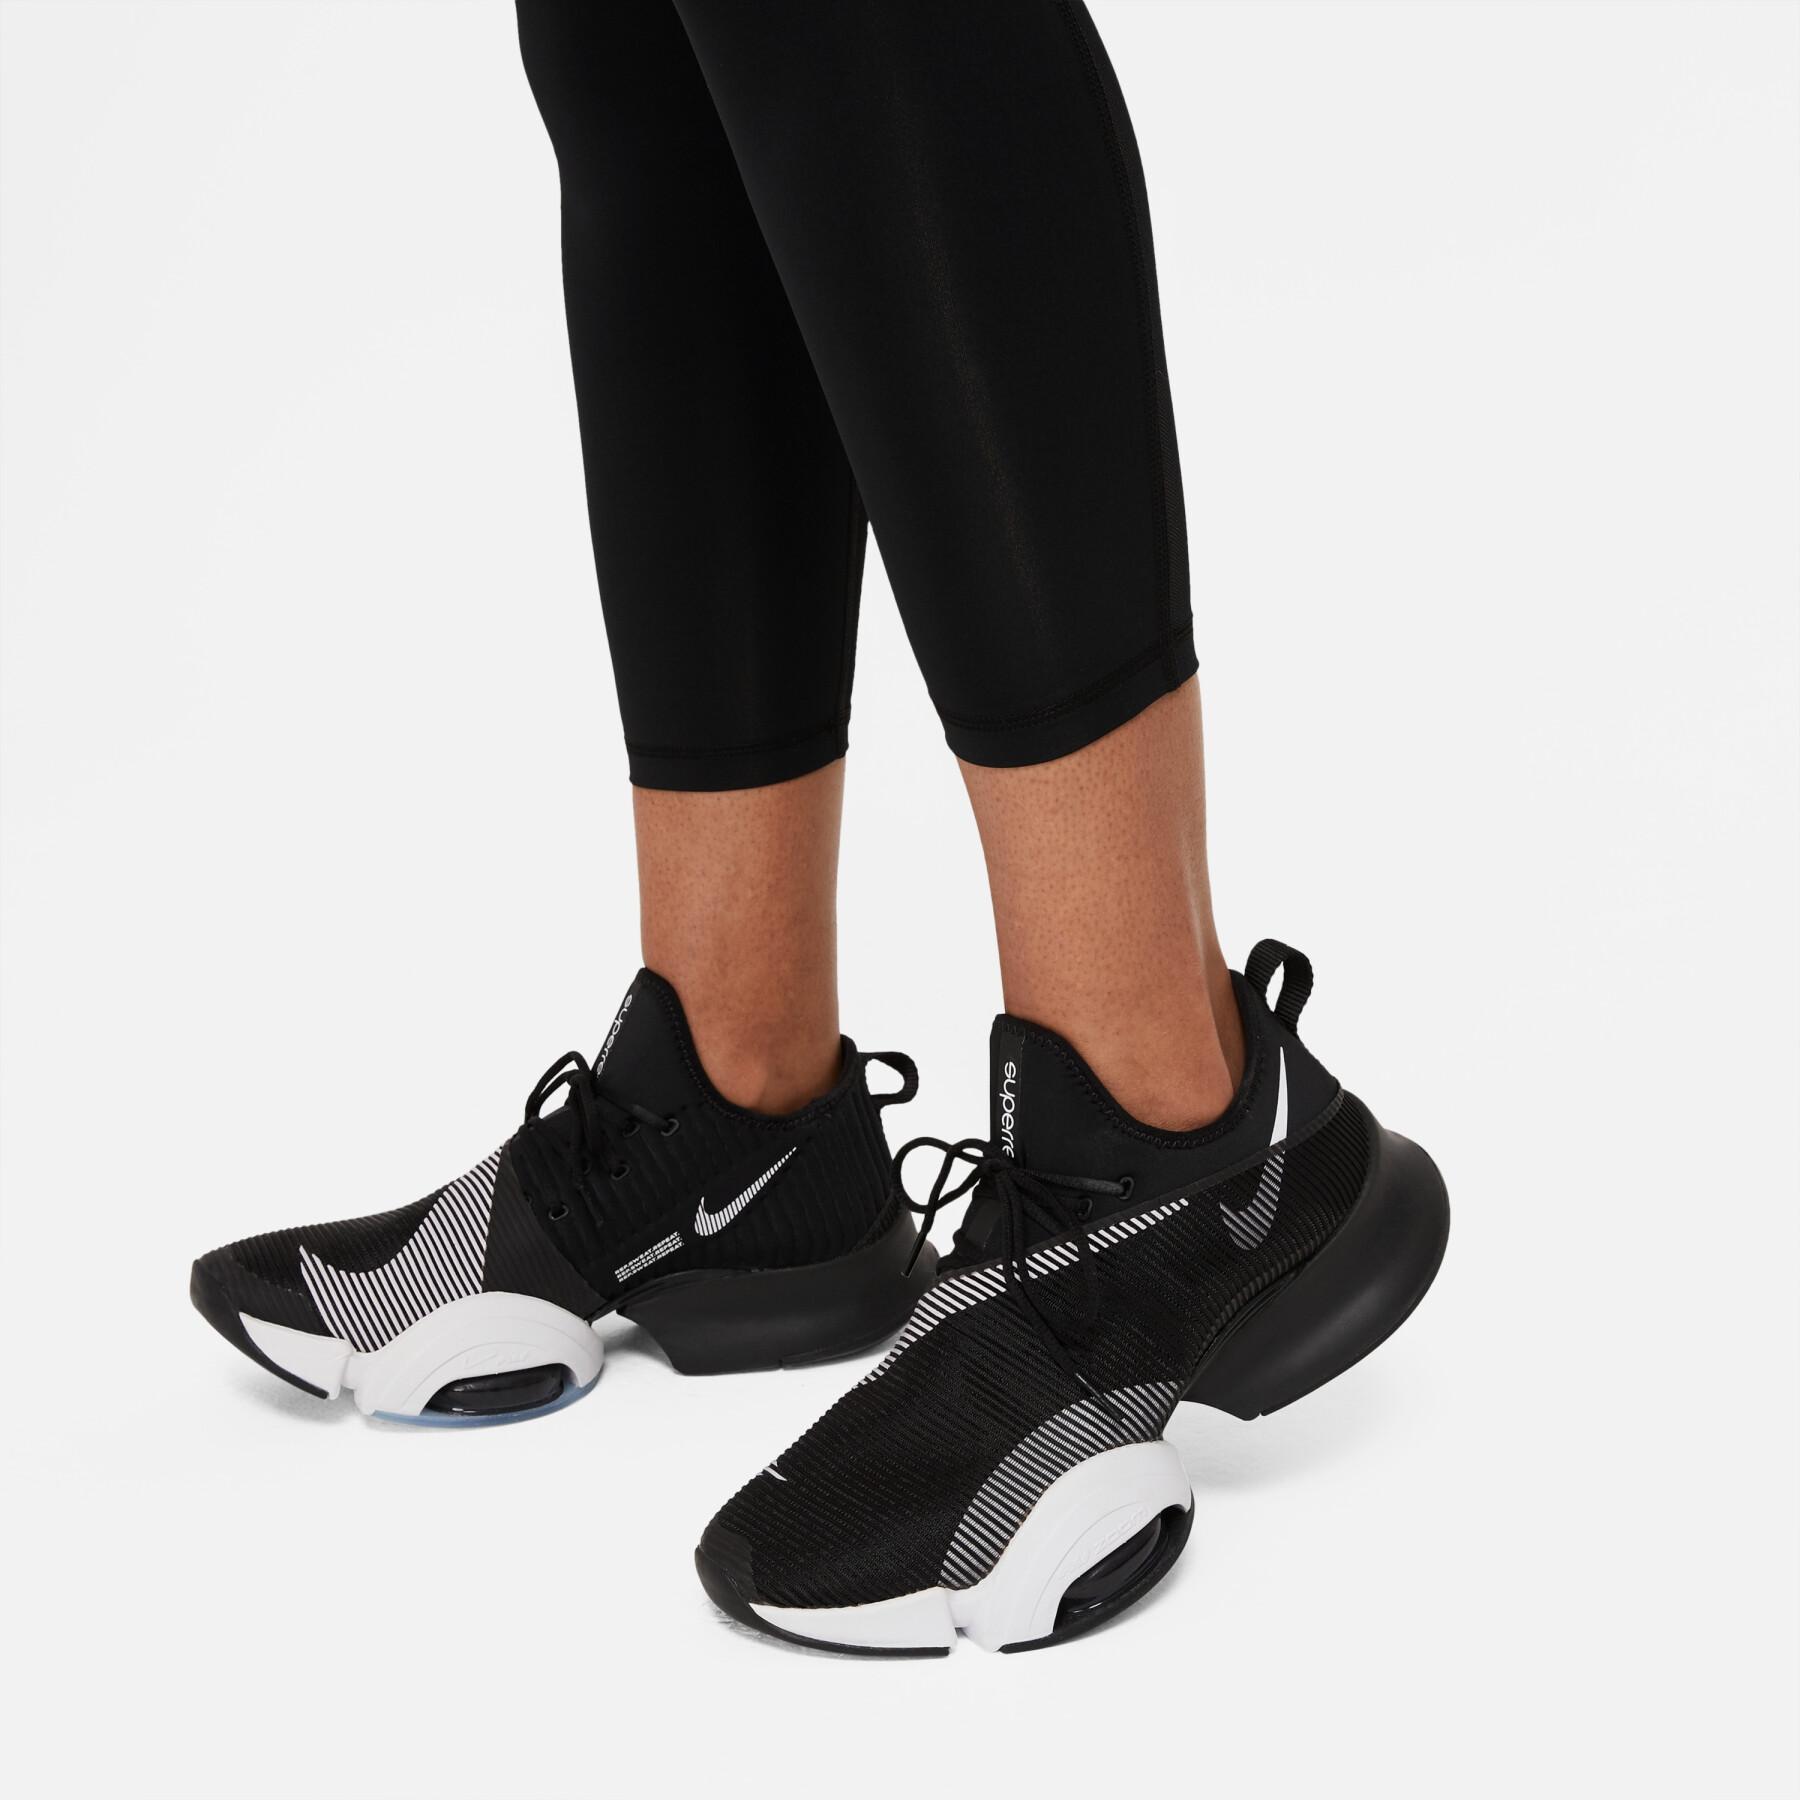 Leggings de mujer Nike Pro 365